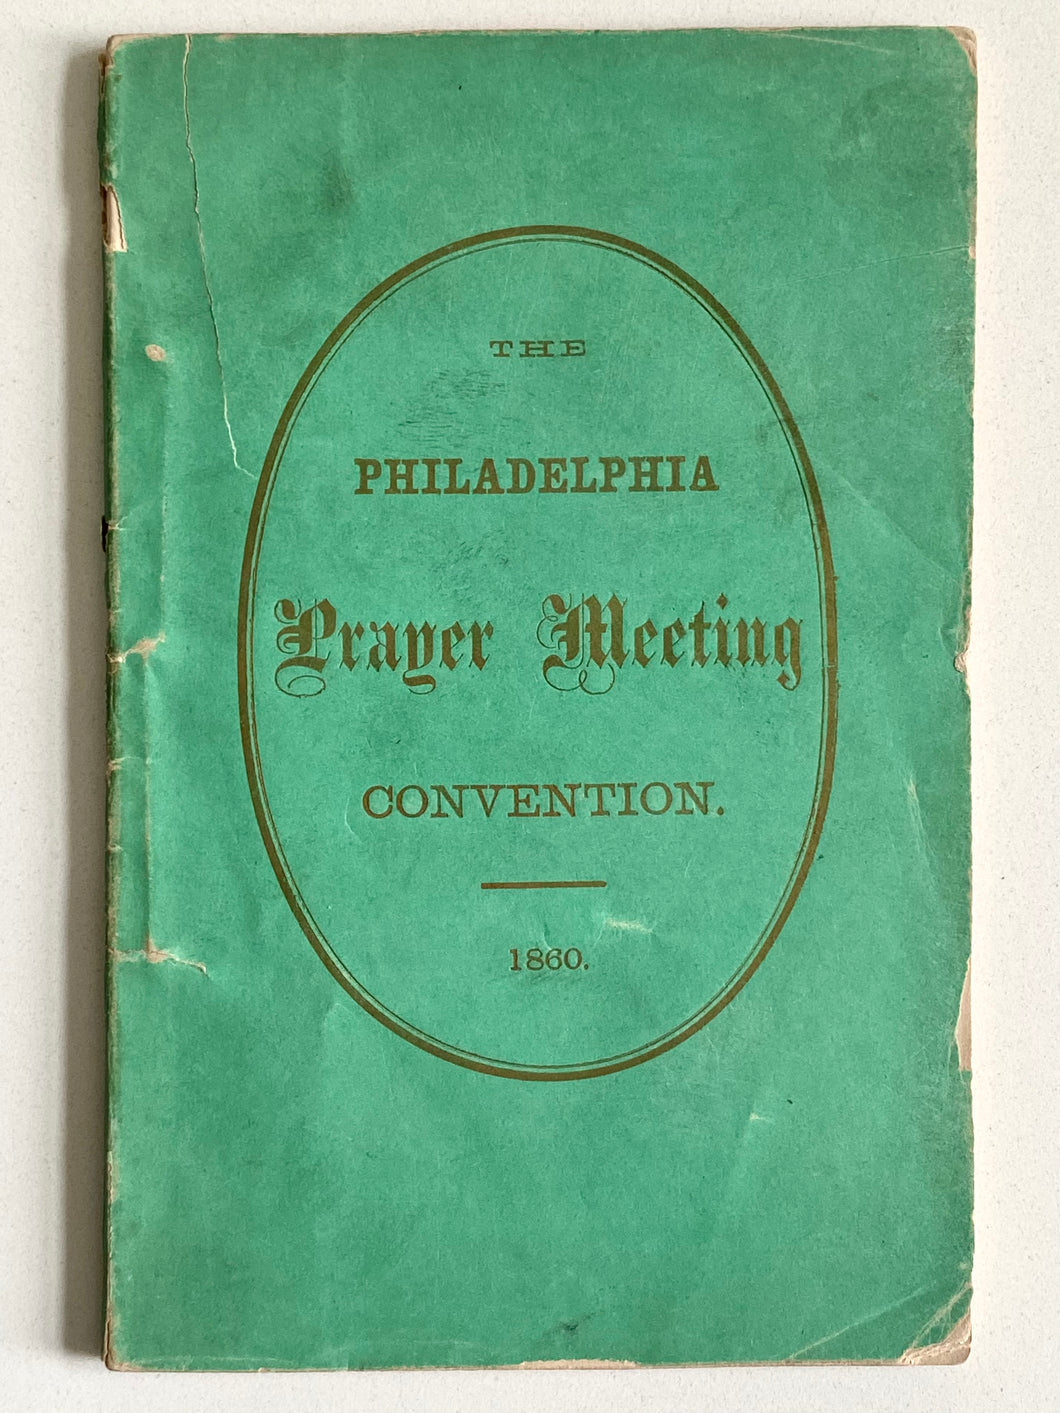 1860 PRAYER MEETING REVIVAL. The Philadelphia Prayer-Meeting Convention of 1860.